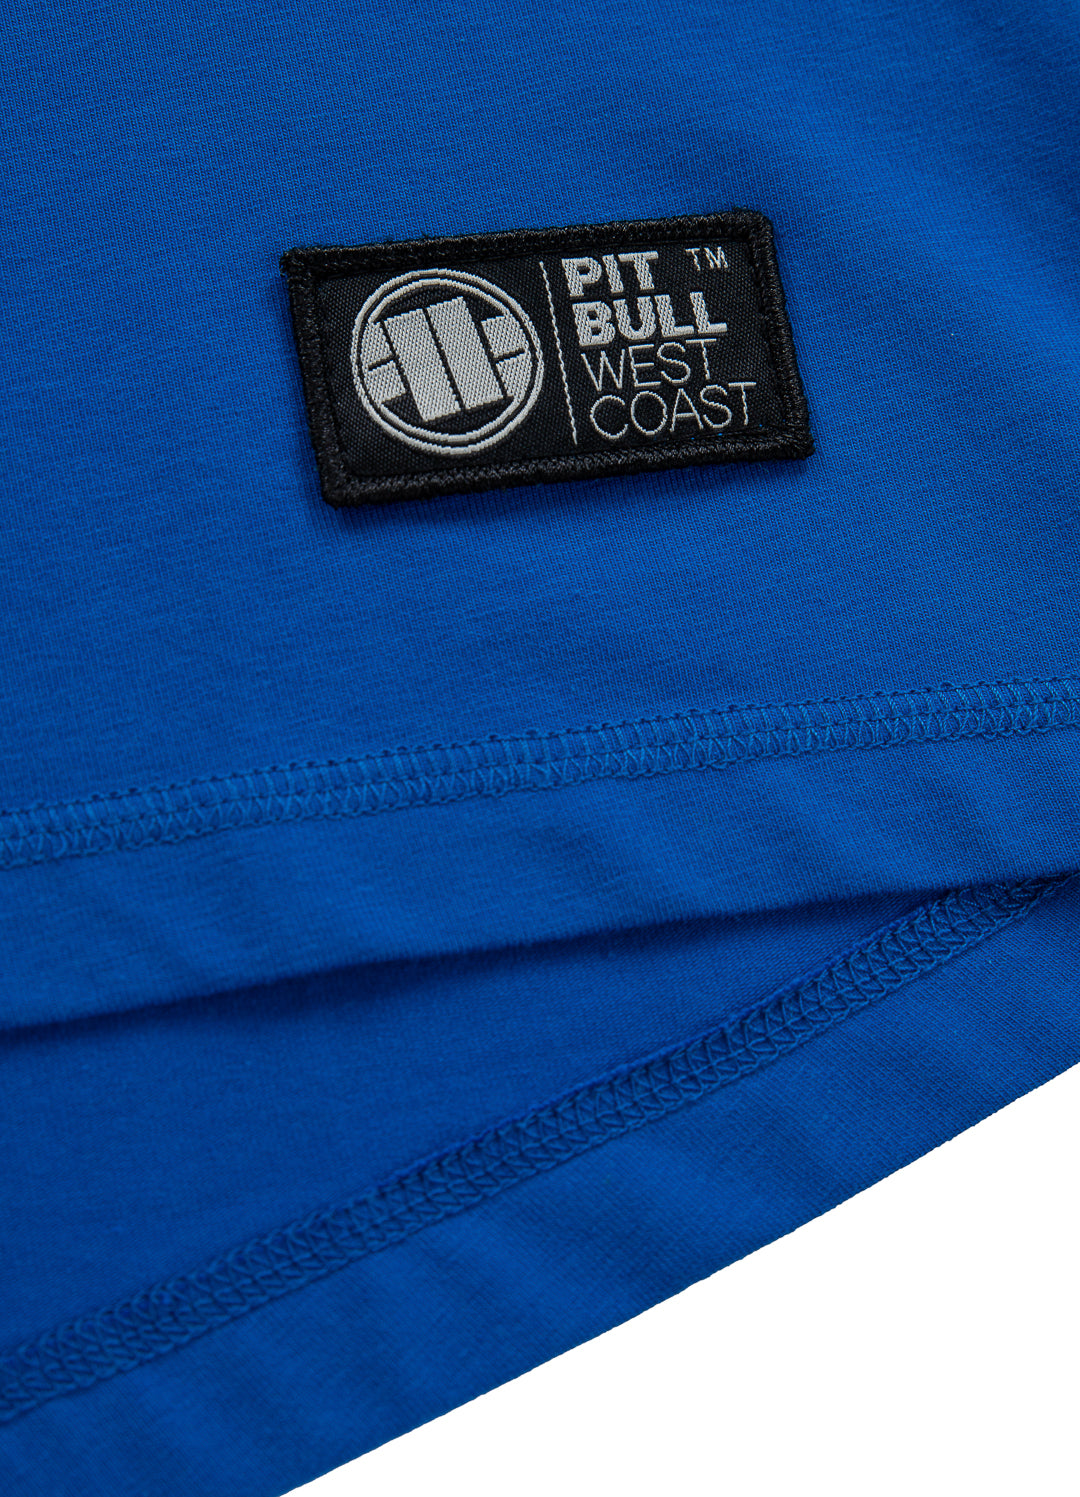 HILLTOP Spandex Heavyweight Royal Blue T-shirt.